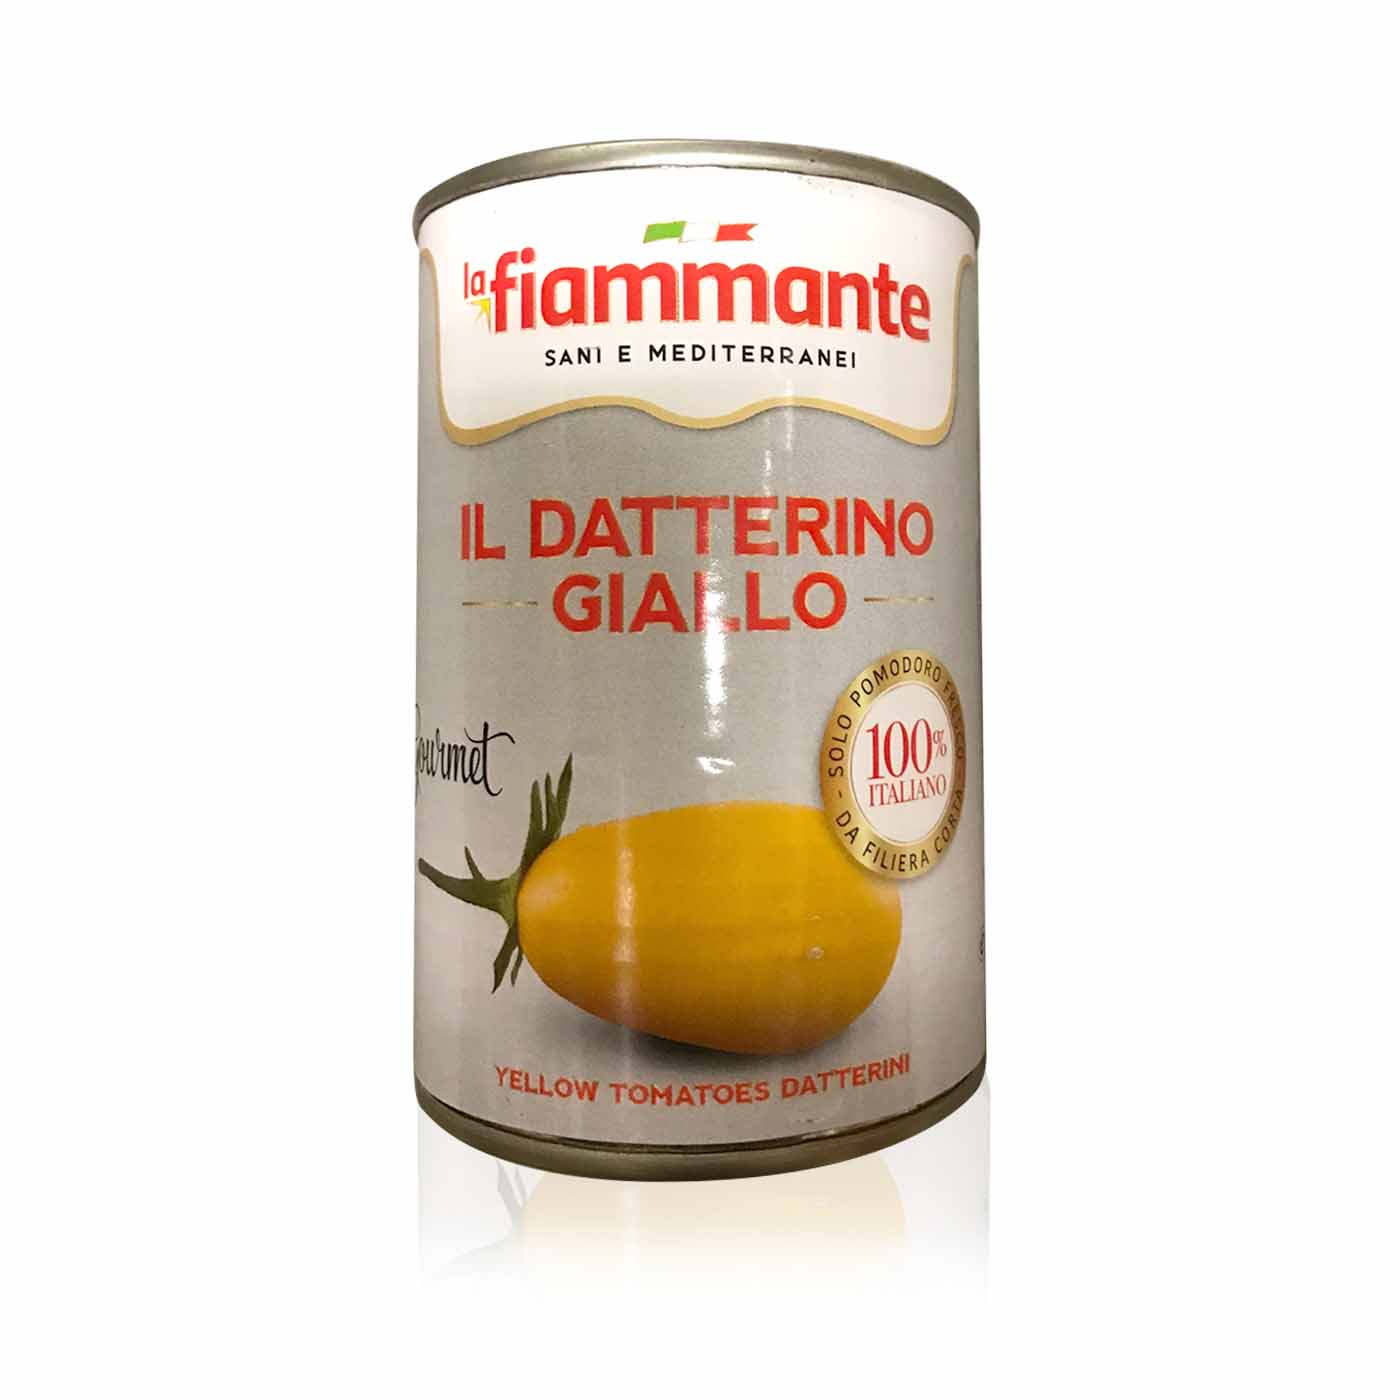 LA FIAMMANTE - Il Datterino Giallo - Gelbe Datterino - 0,4kg - italienisch - einkaufen.de